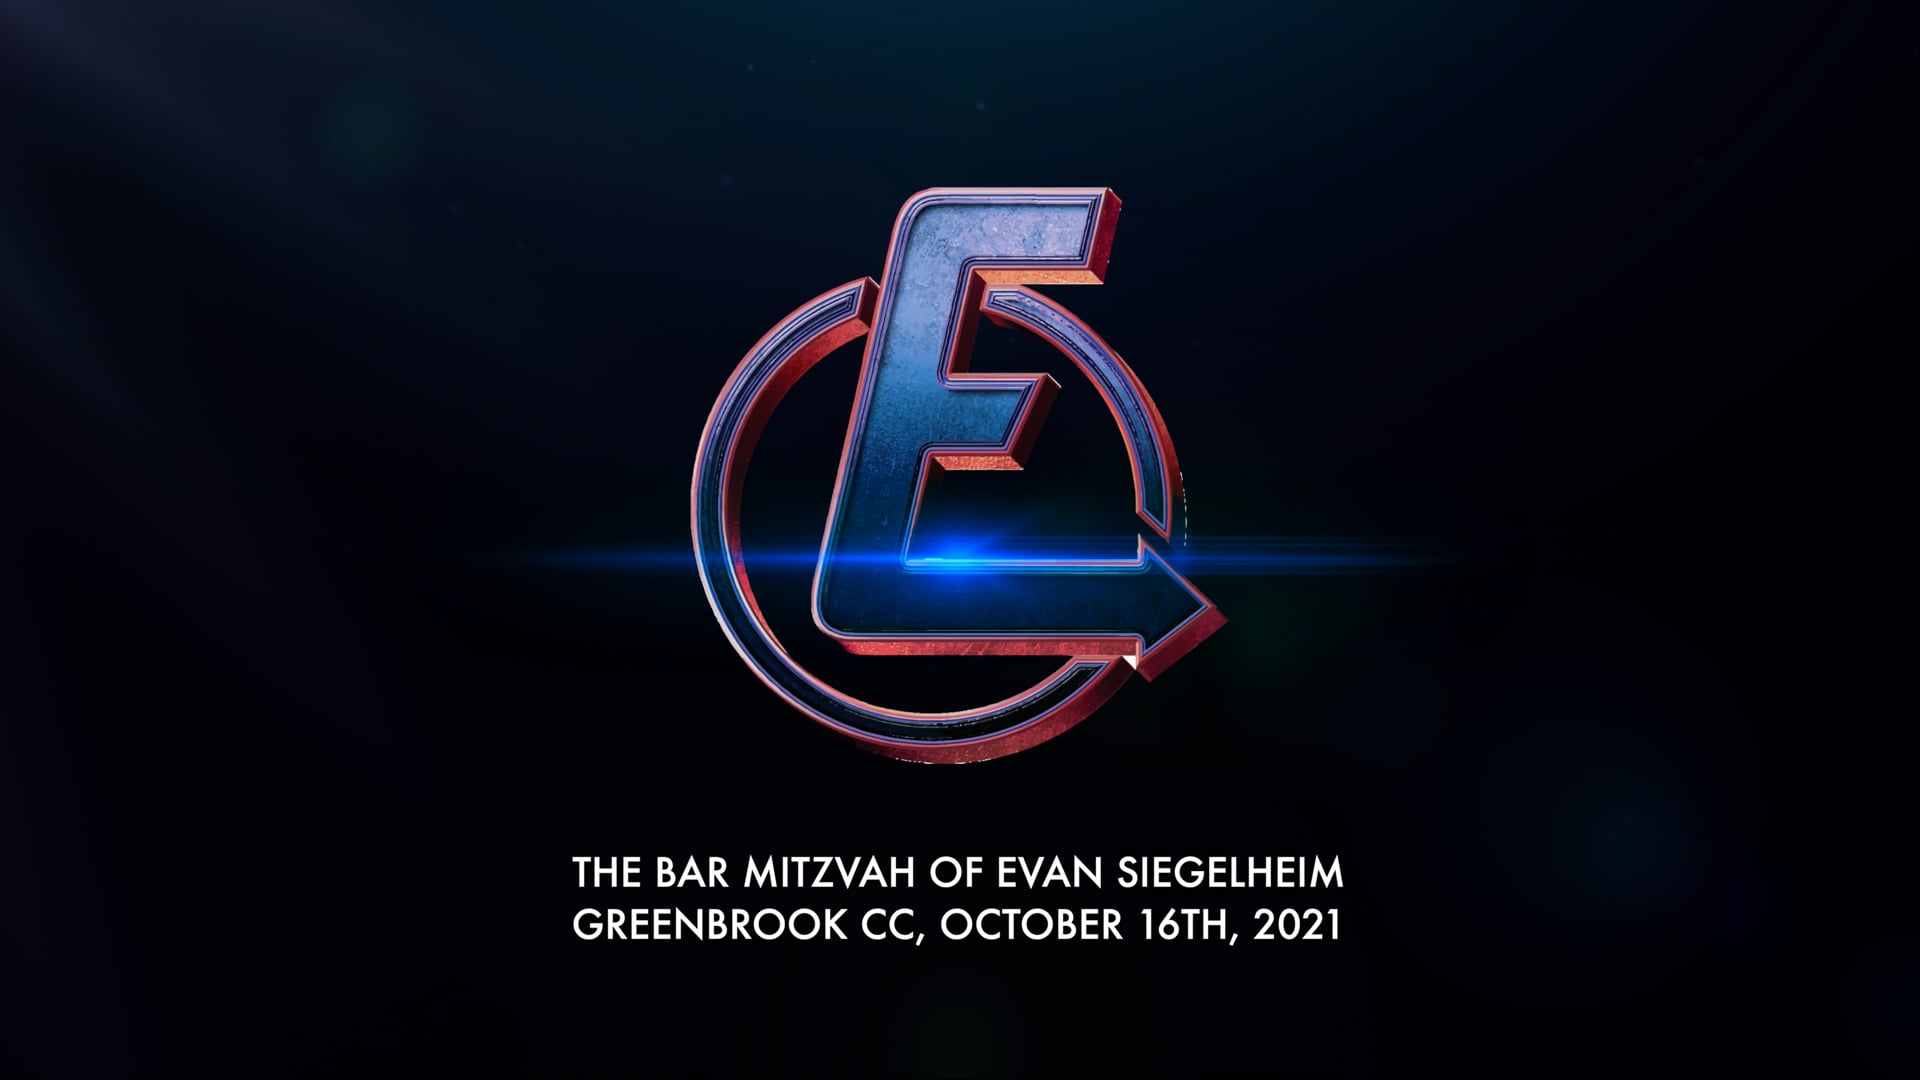 The Bar Mitzvah of Evan Siegelheim Highlight Film
Green Brook CC, NJ, October 16th, 2021